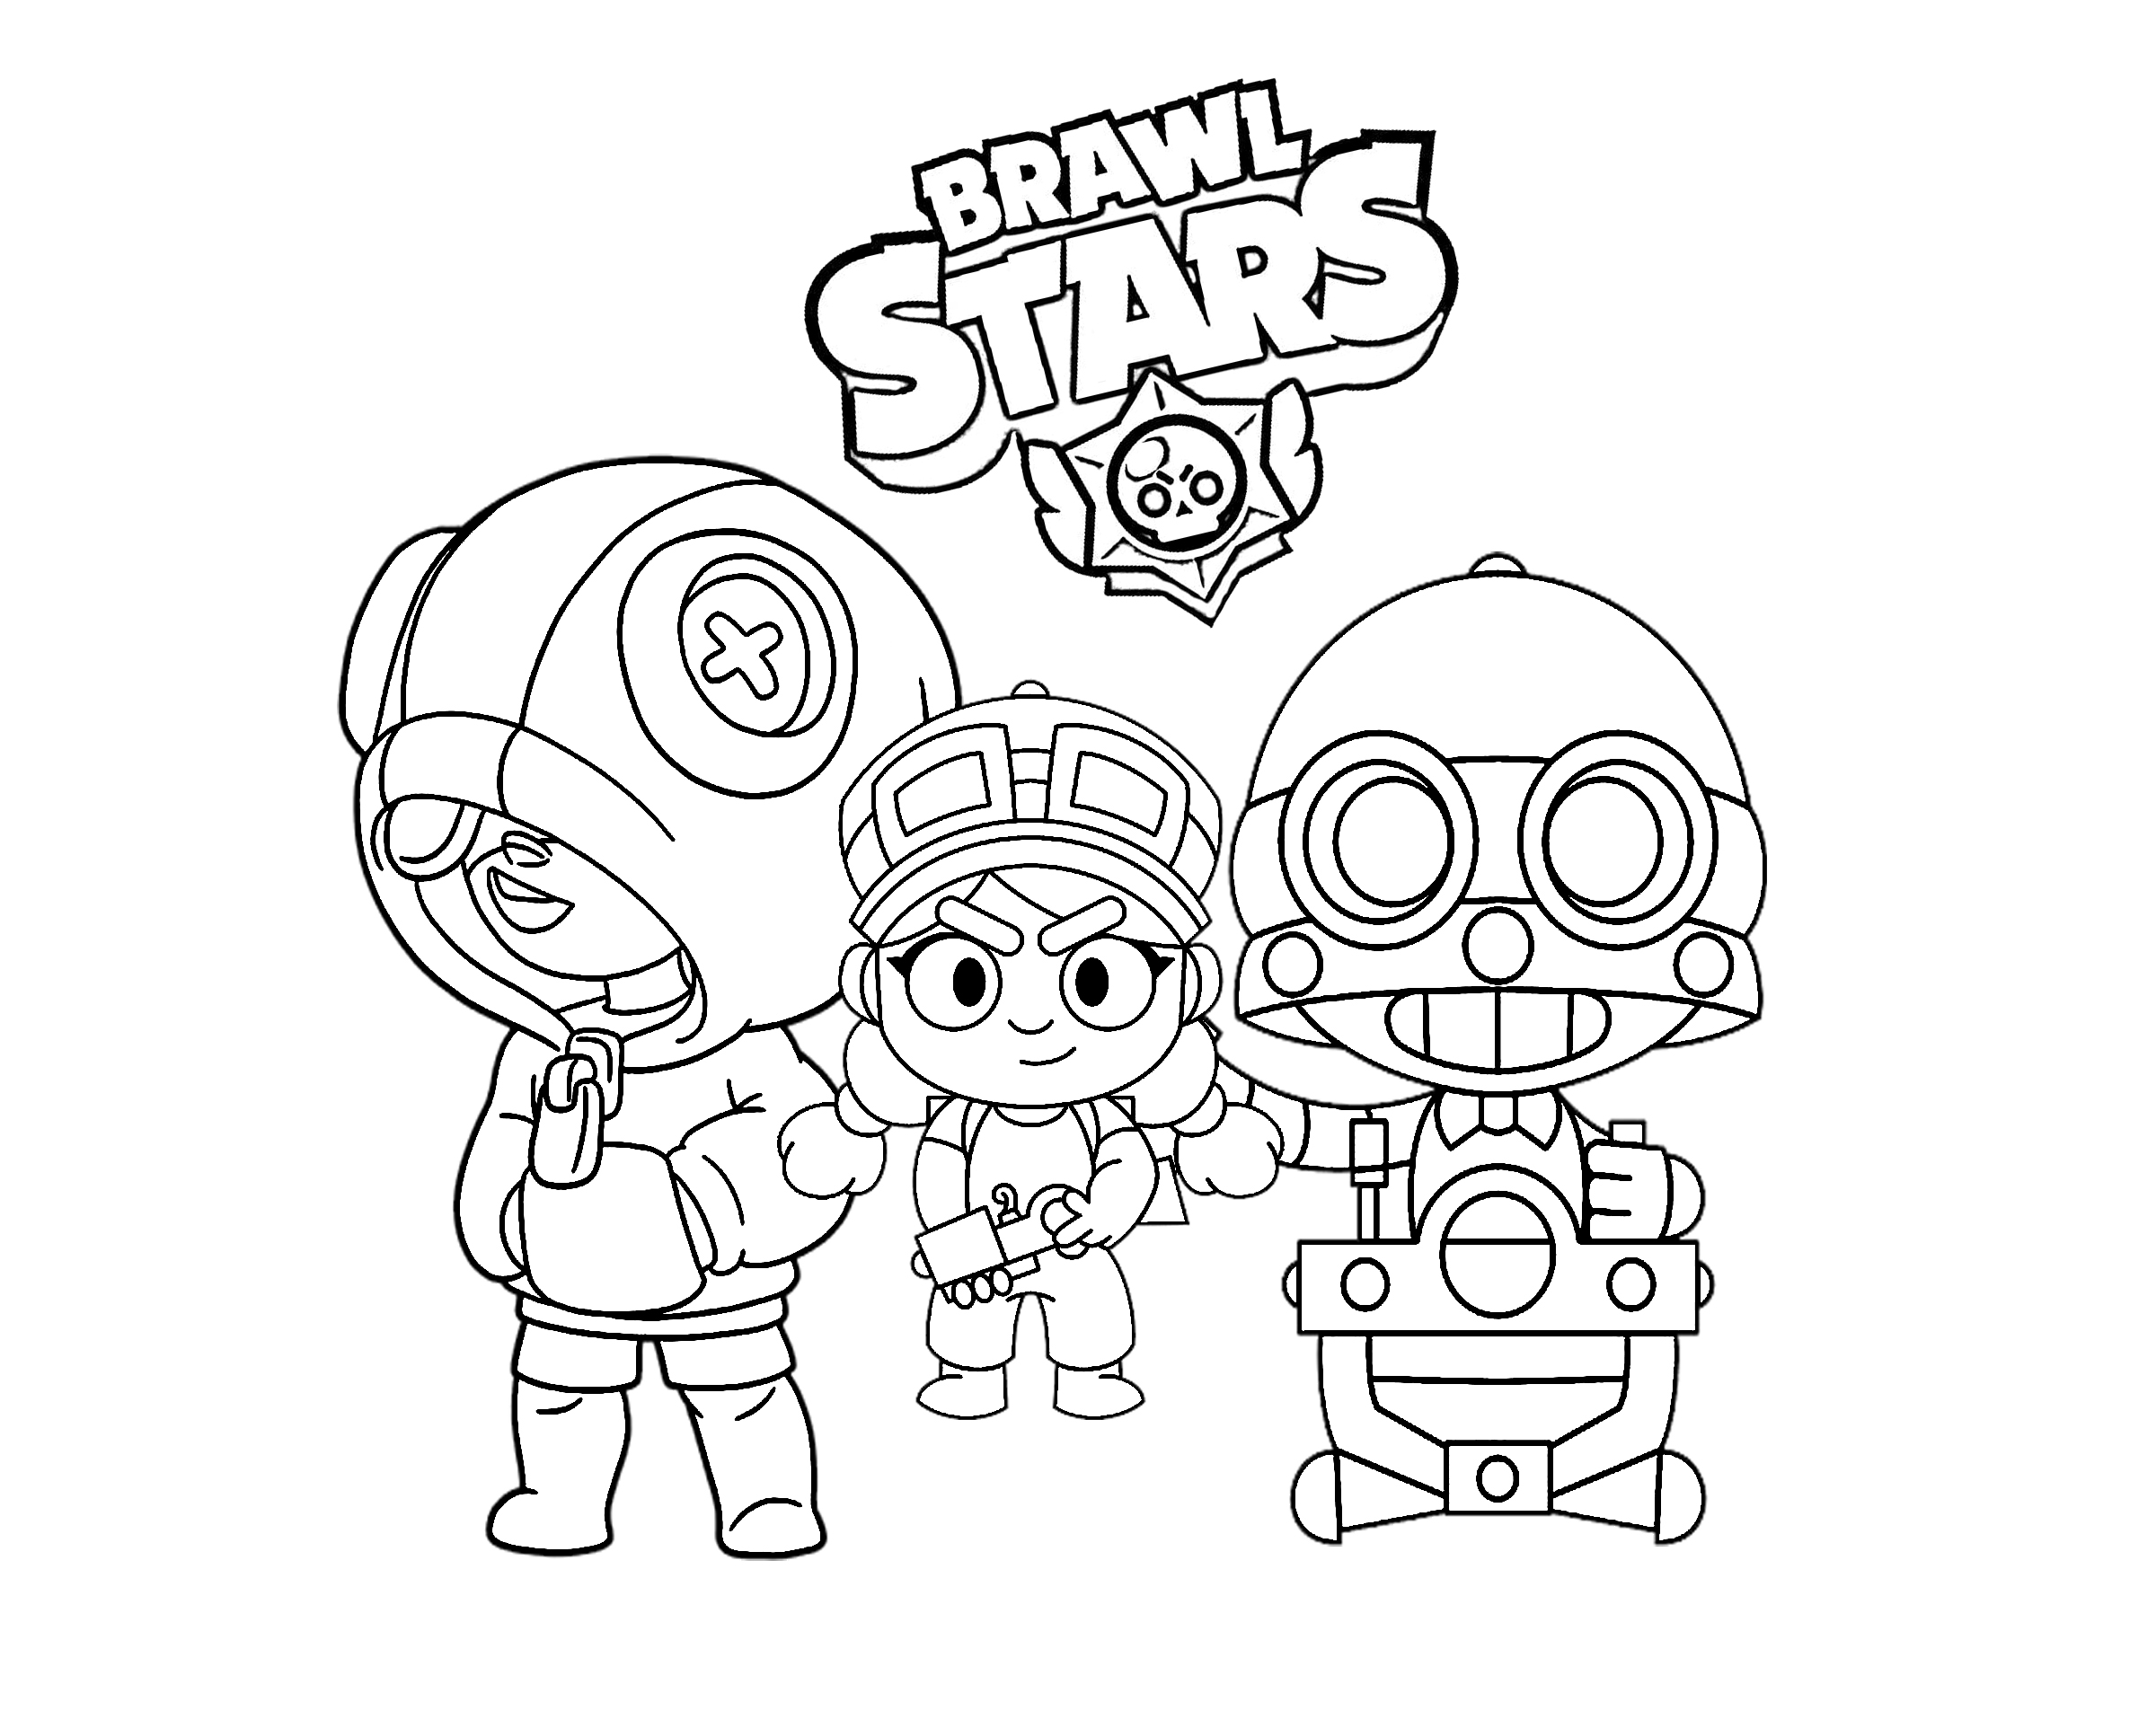 18 Dibujos De Brawl Stars Para Colorear - personajes dibujos de brawl stars para colorear